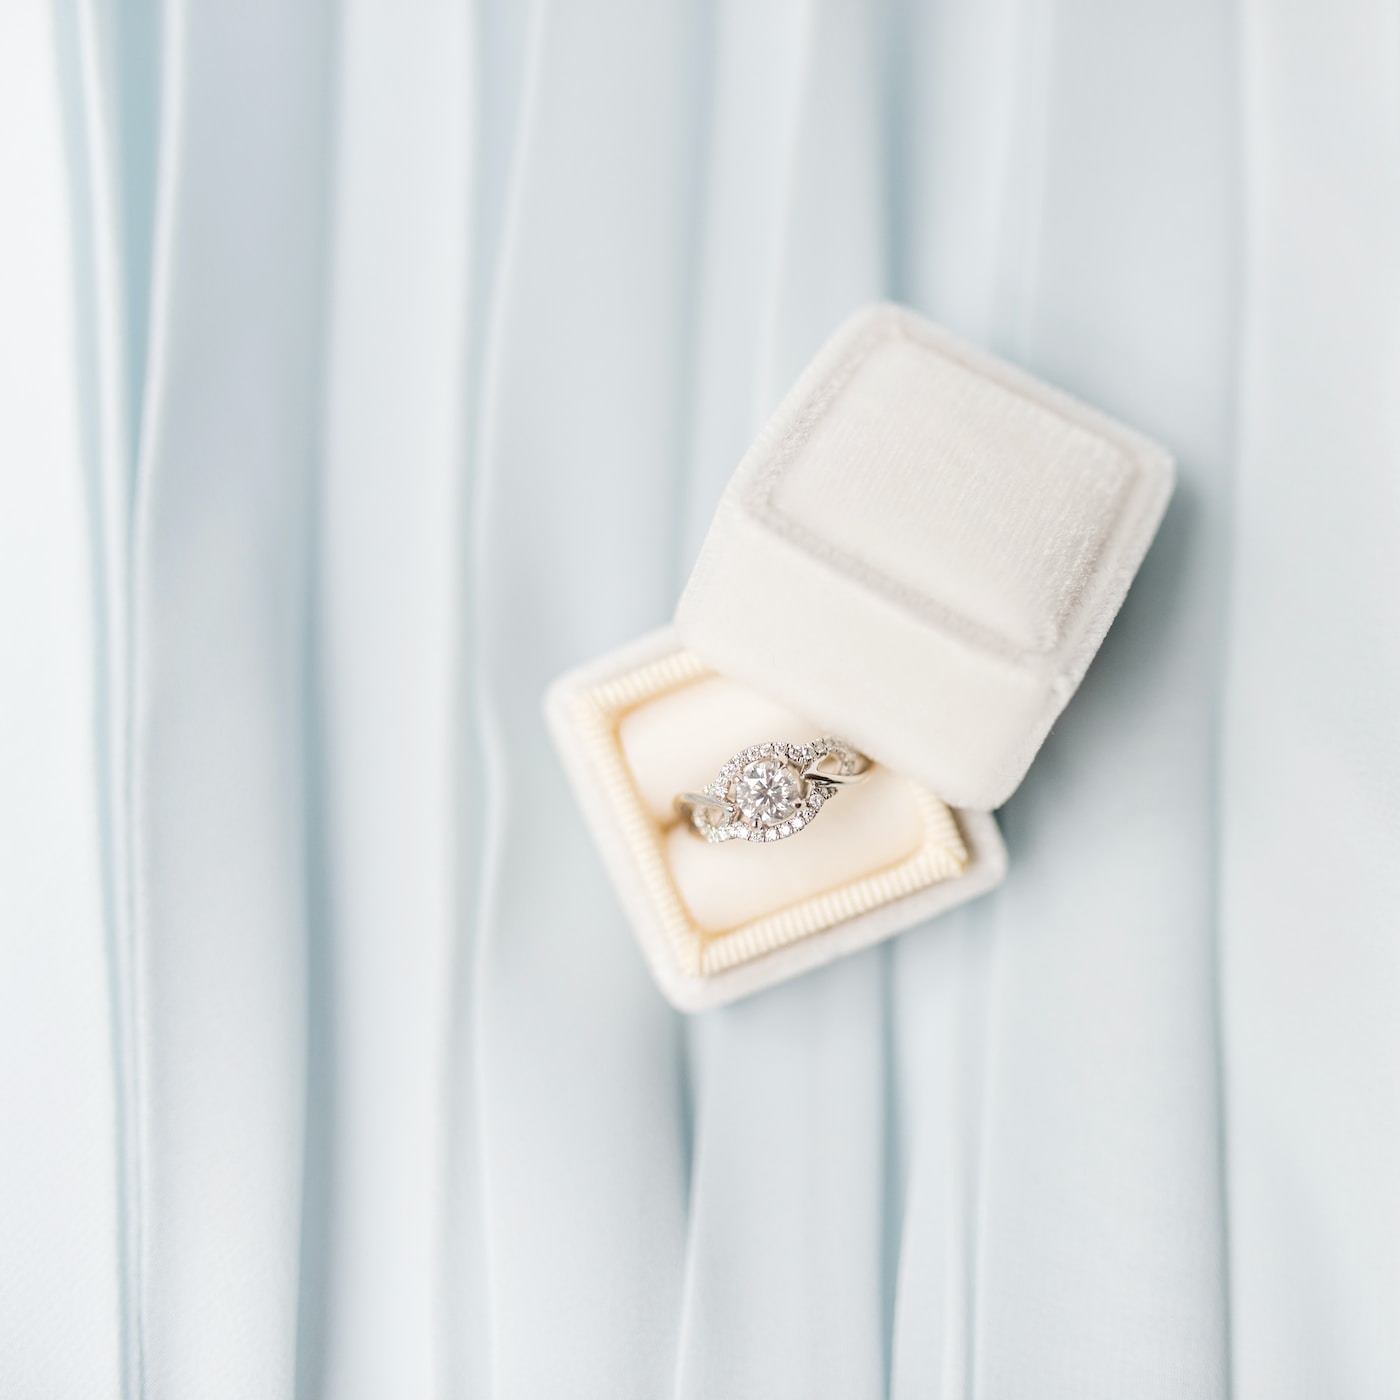 10 Most Beautiful Wedding Rings at My Jewelry Box ...